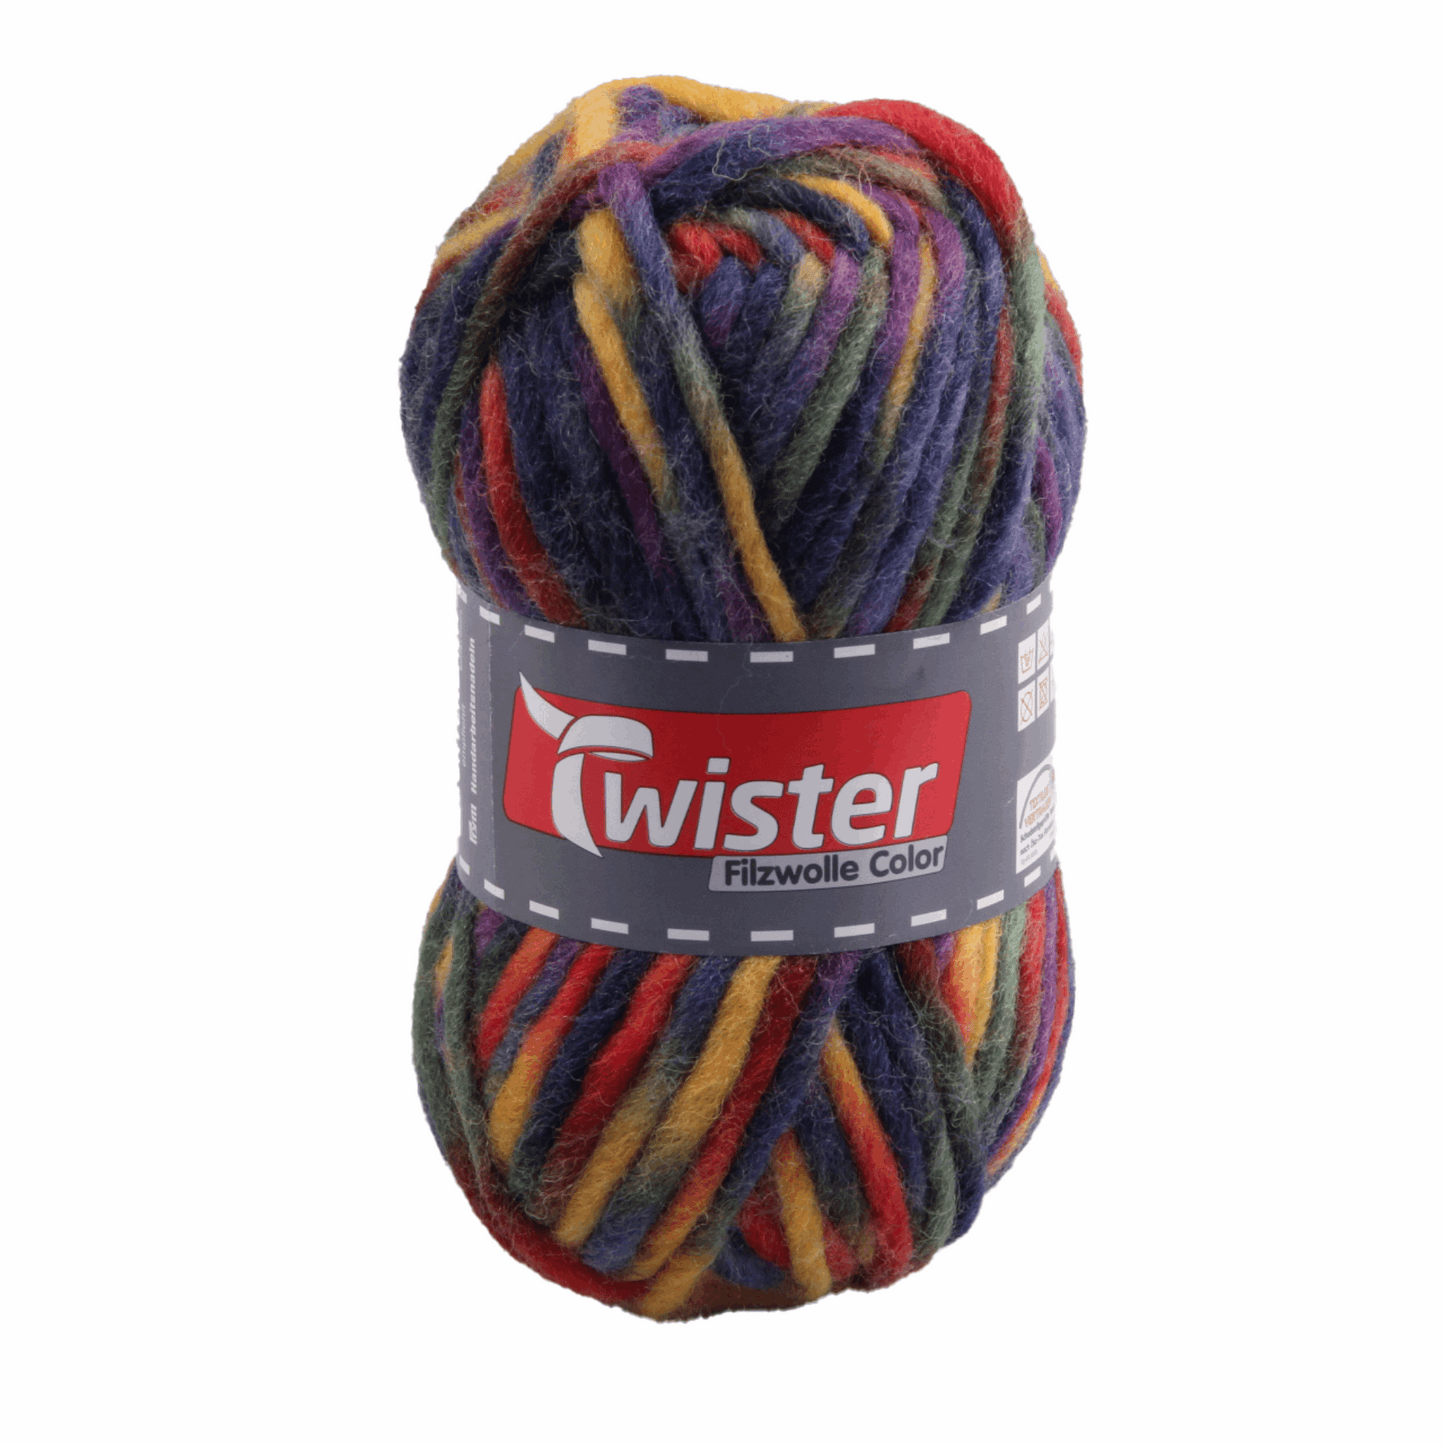 Twister Filzwolle Color 50G, 98536, Farbe kolibrie 174